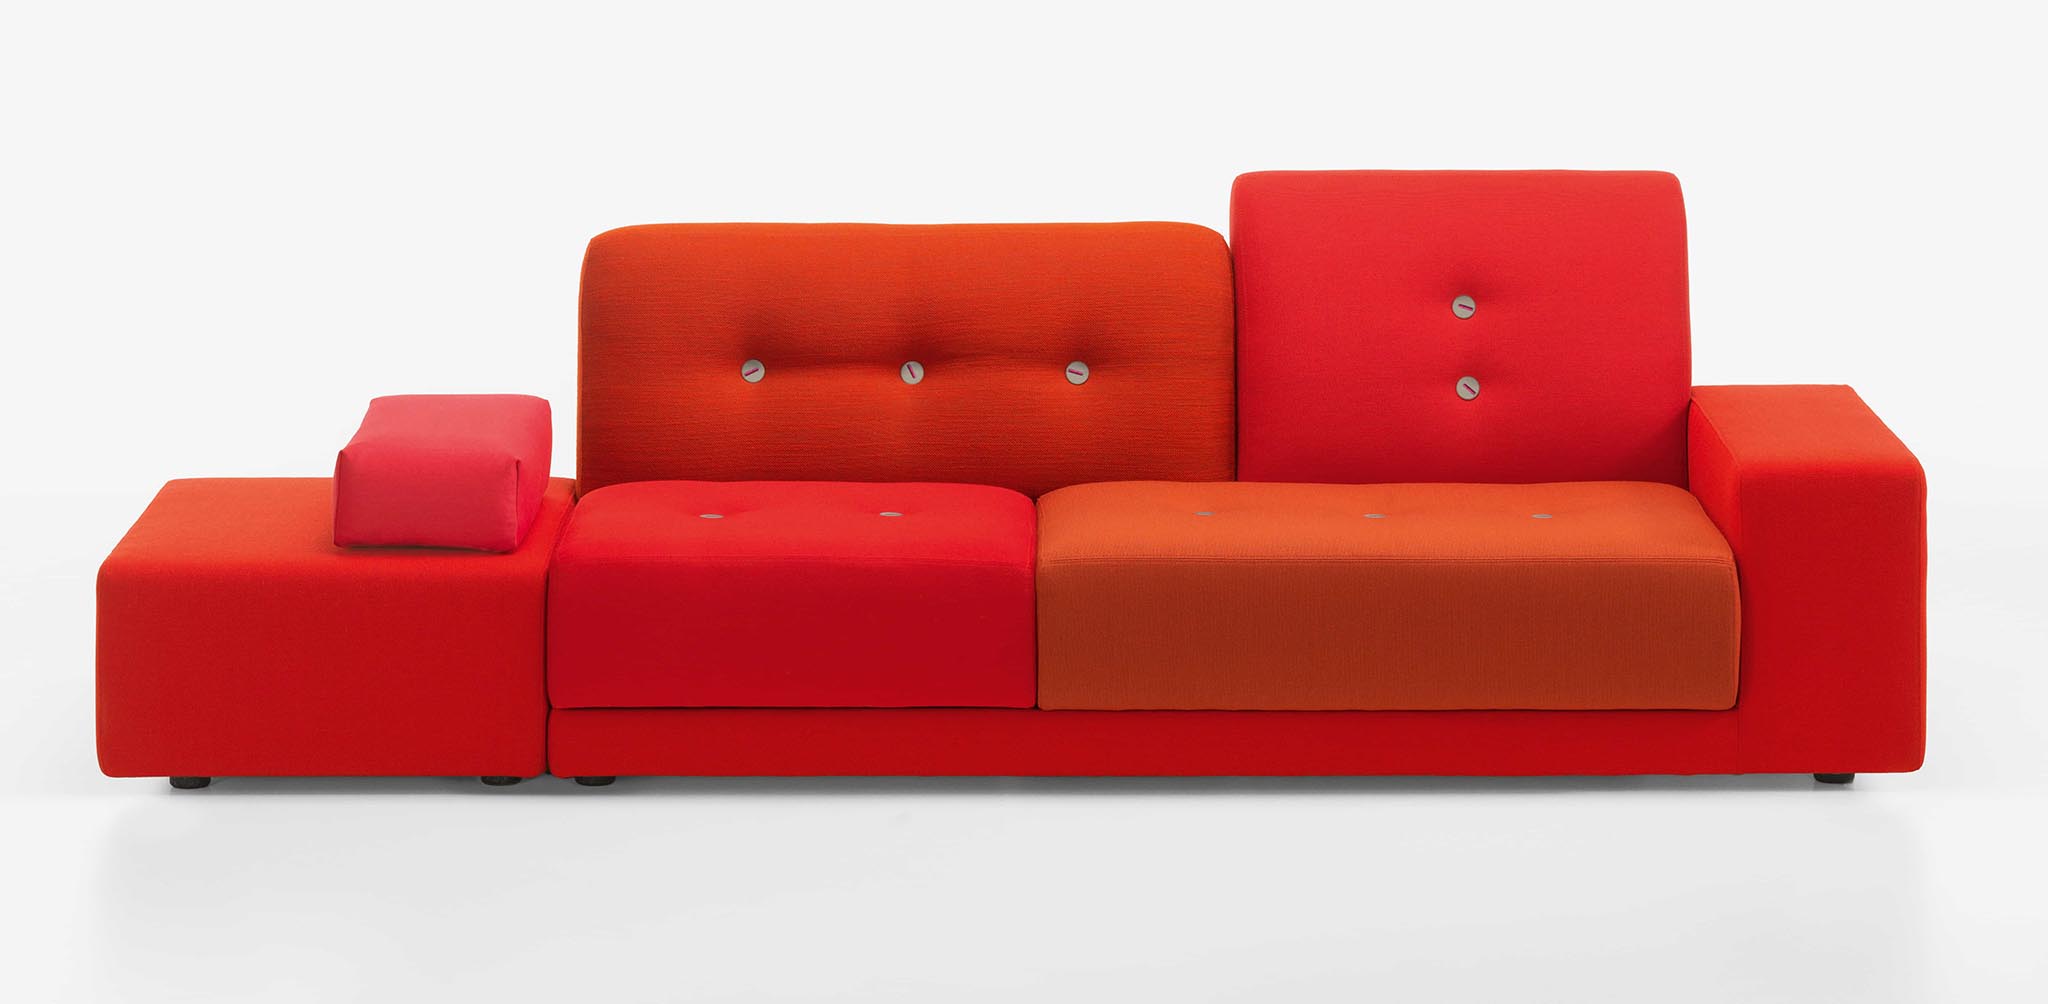 red upholstered modular polder sofa by Hella Jongerius